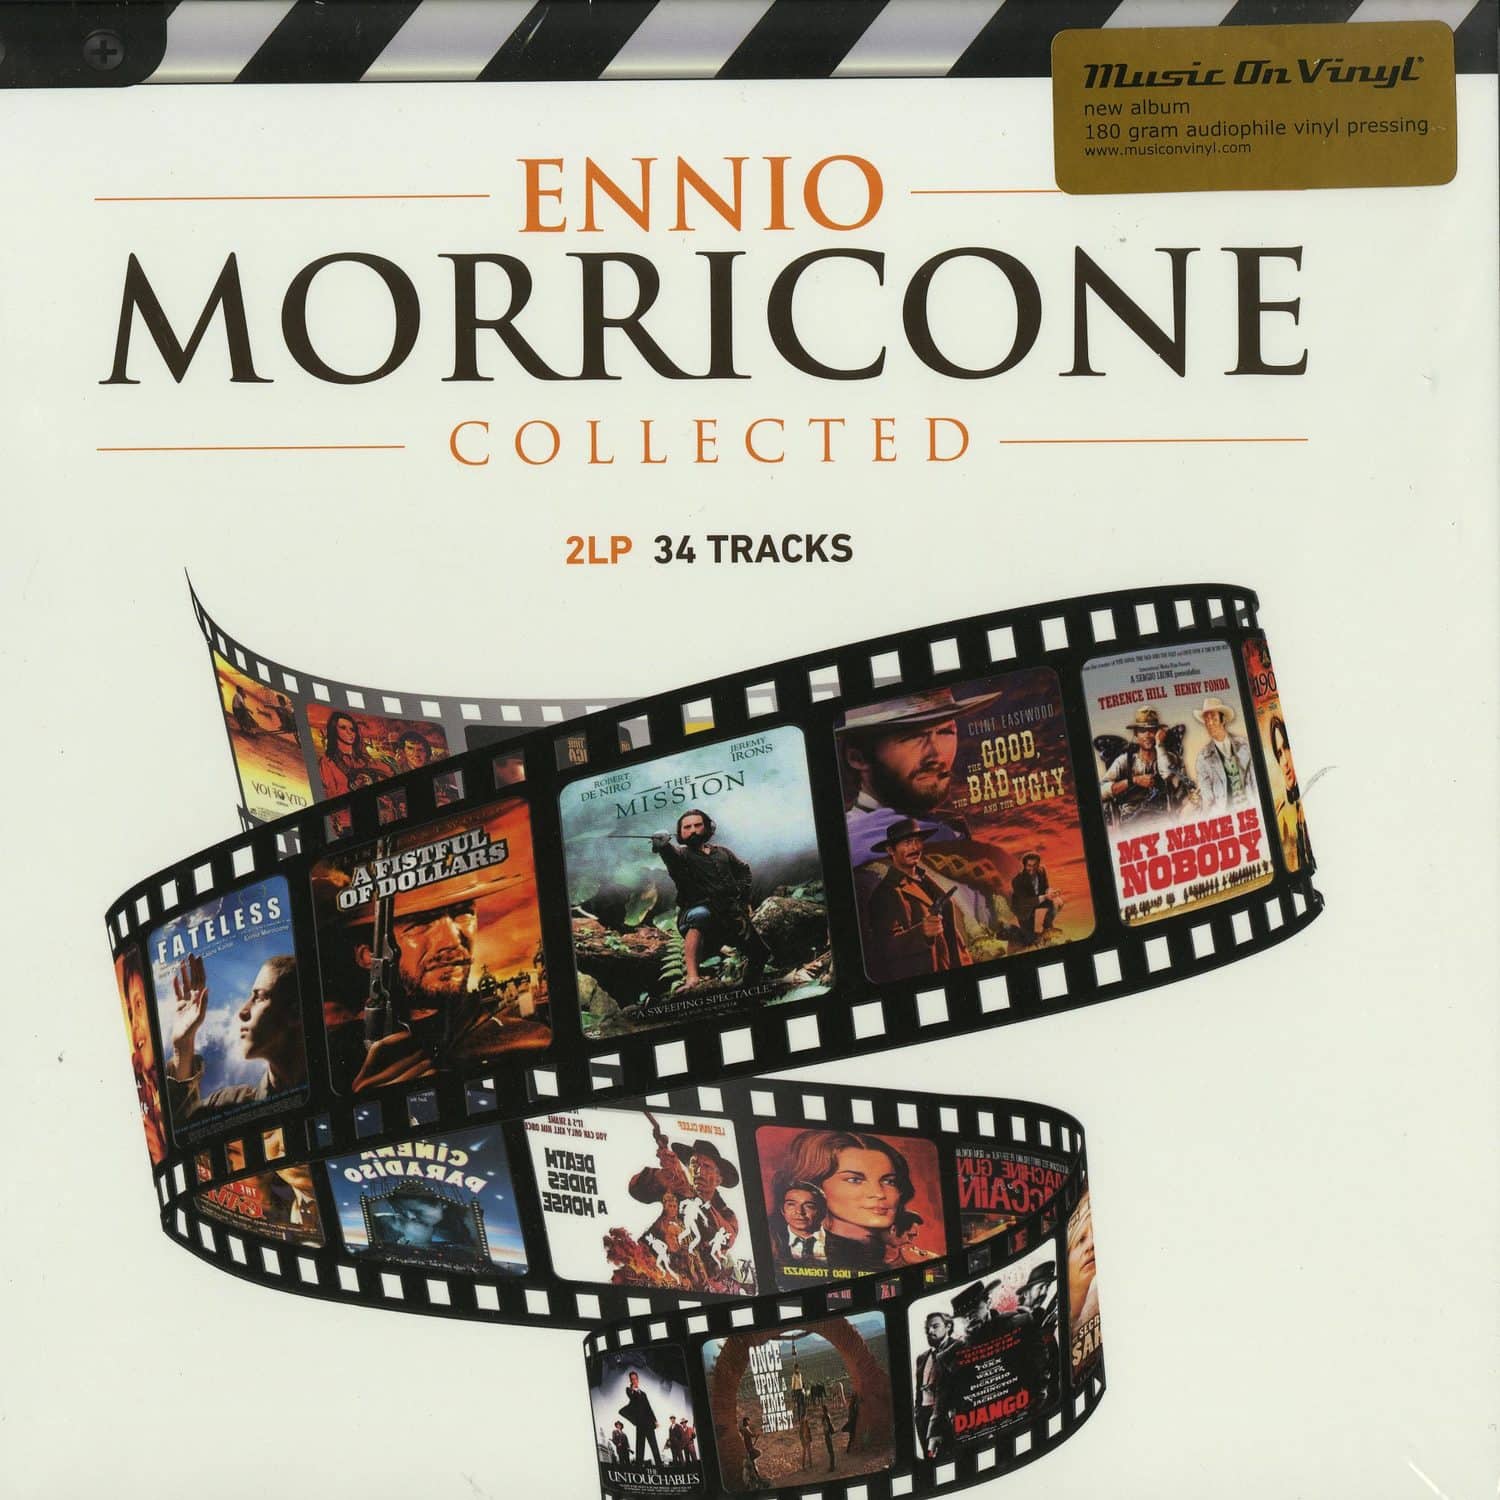 Best collection 2. Ennio Morricone пластинка. Ennio Morricone виниловые. Ennio Morricone collected LP 2021. Композиция Эннио Морриконе известные композиции.